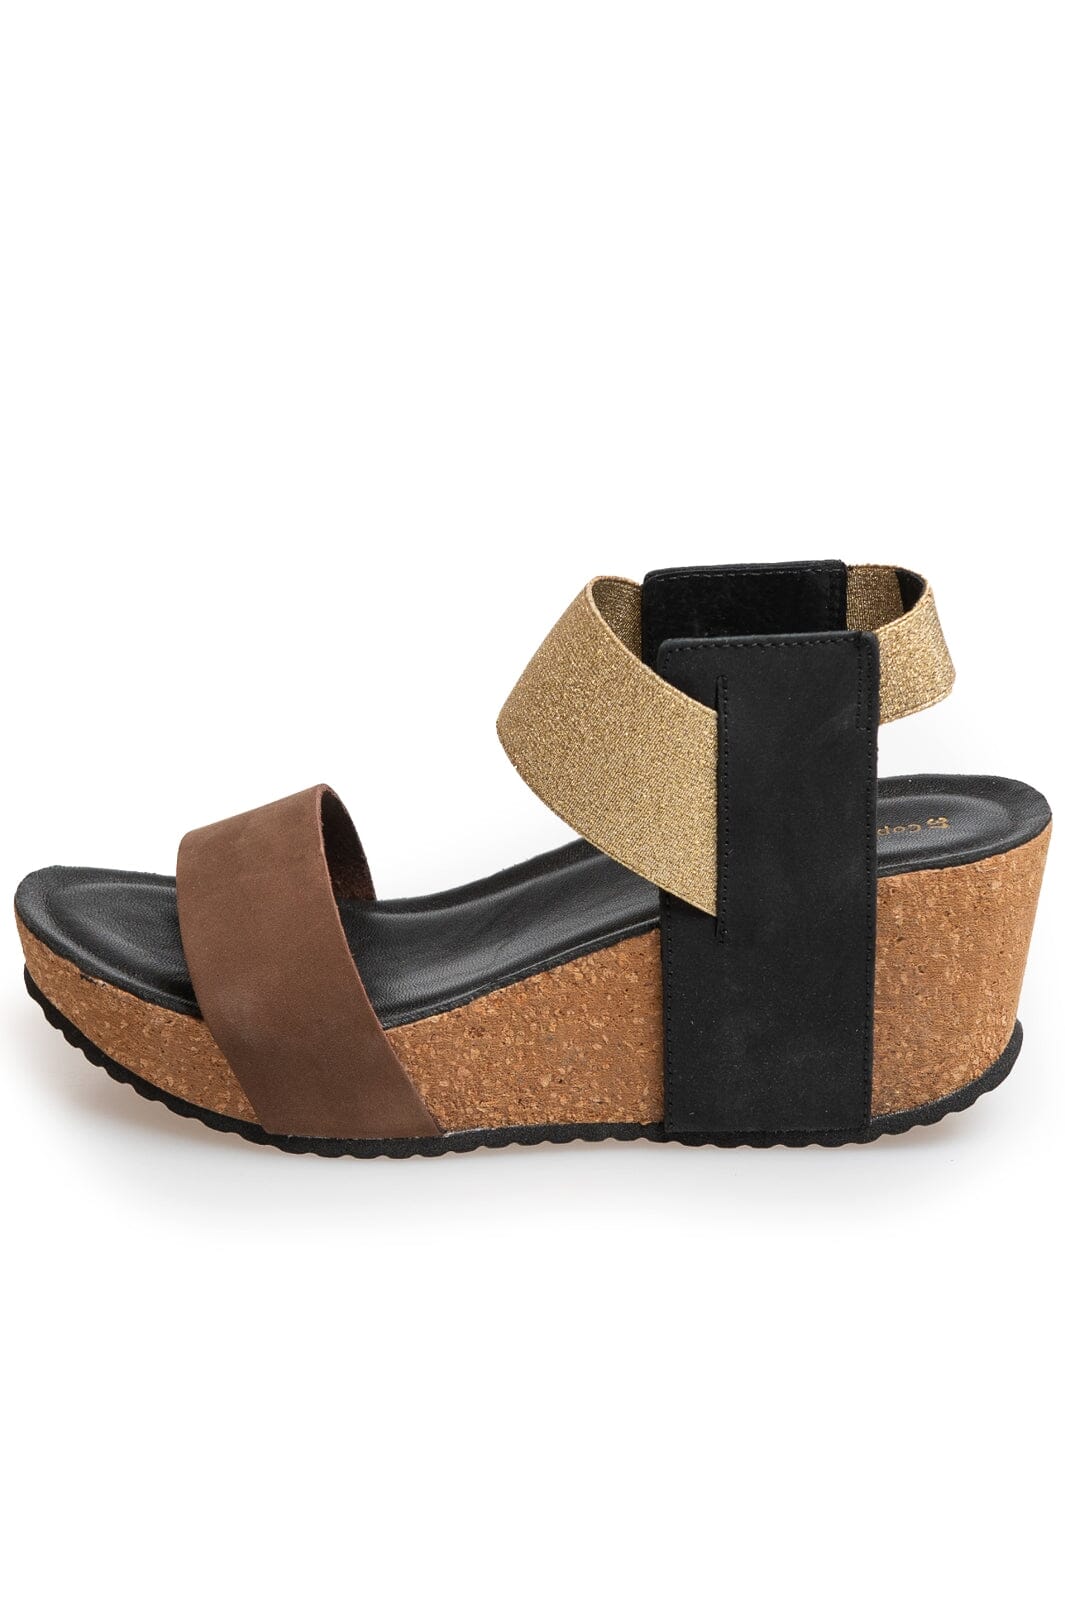 Copenhagen Shoes - The New Daniela - 257 Brown Gold Sandaler 